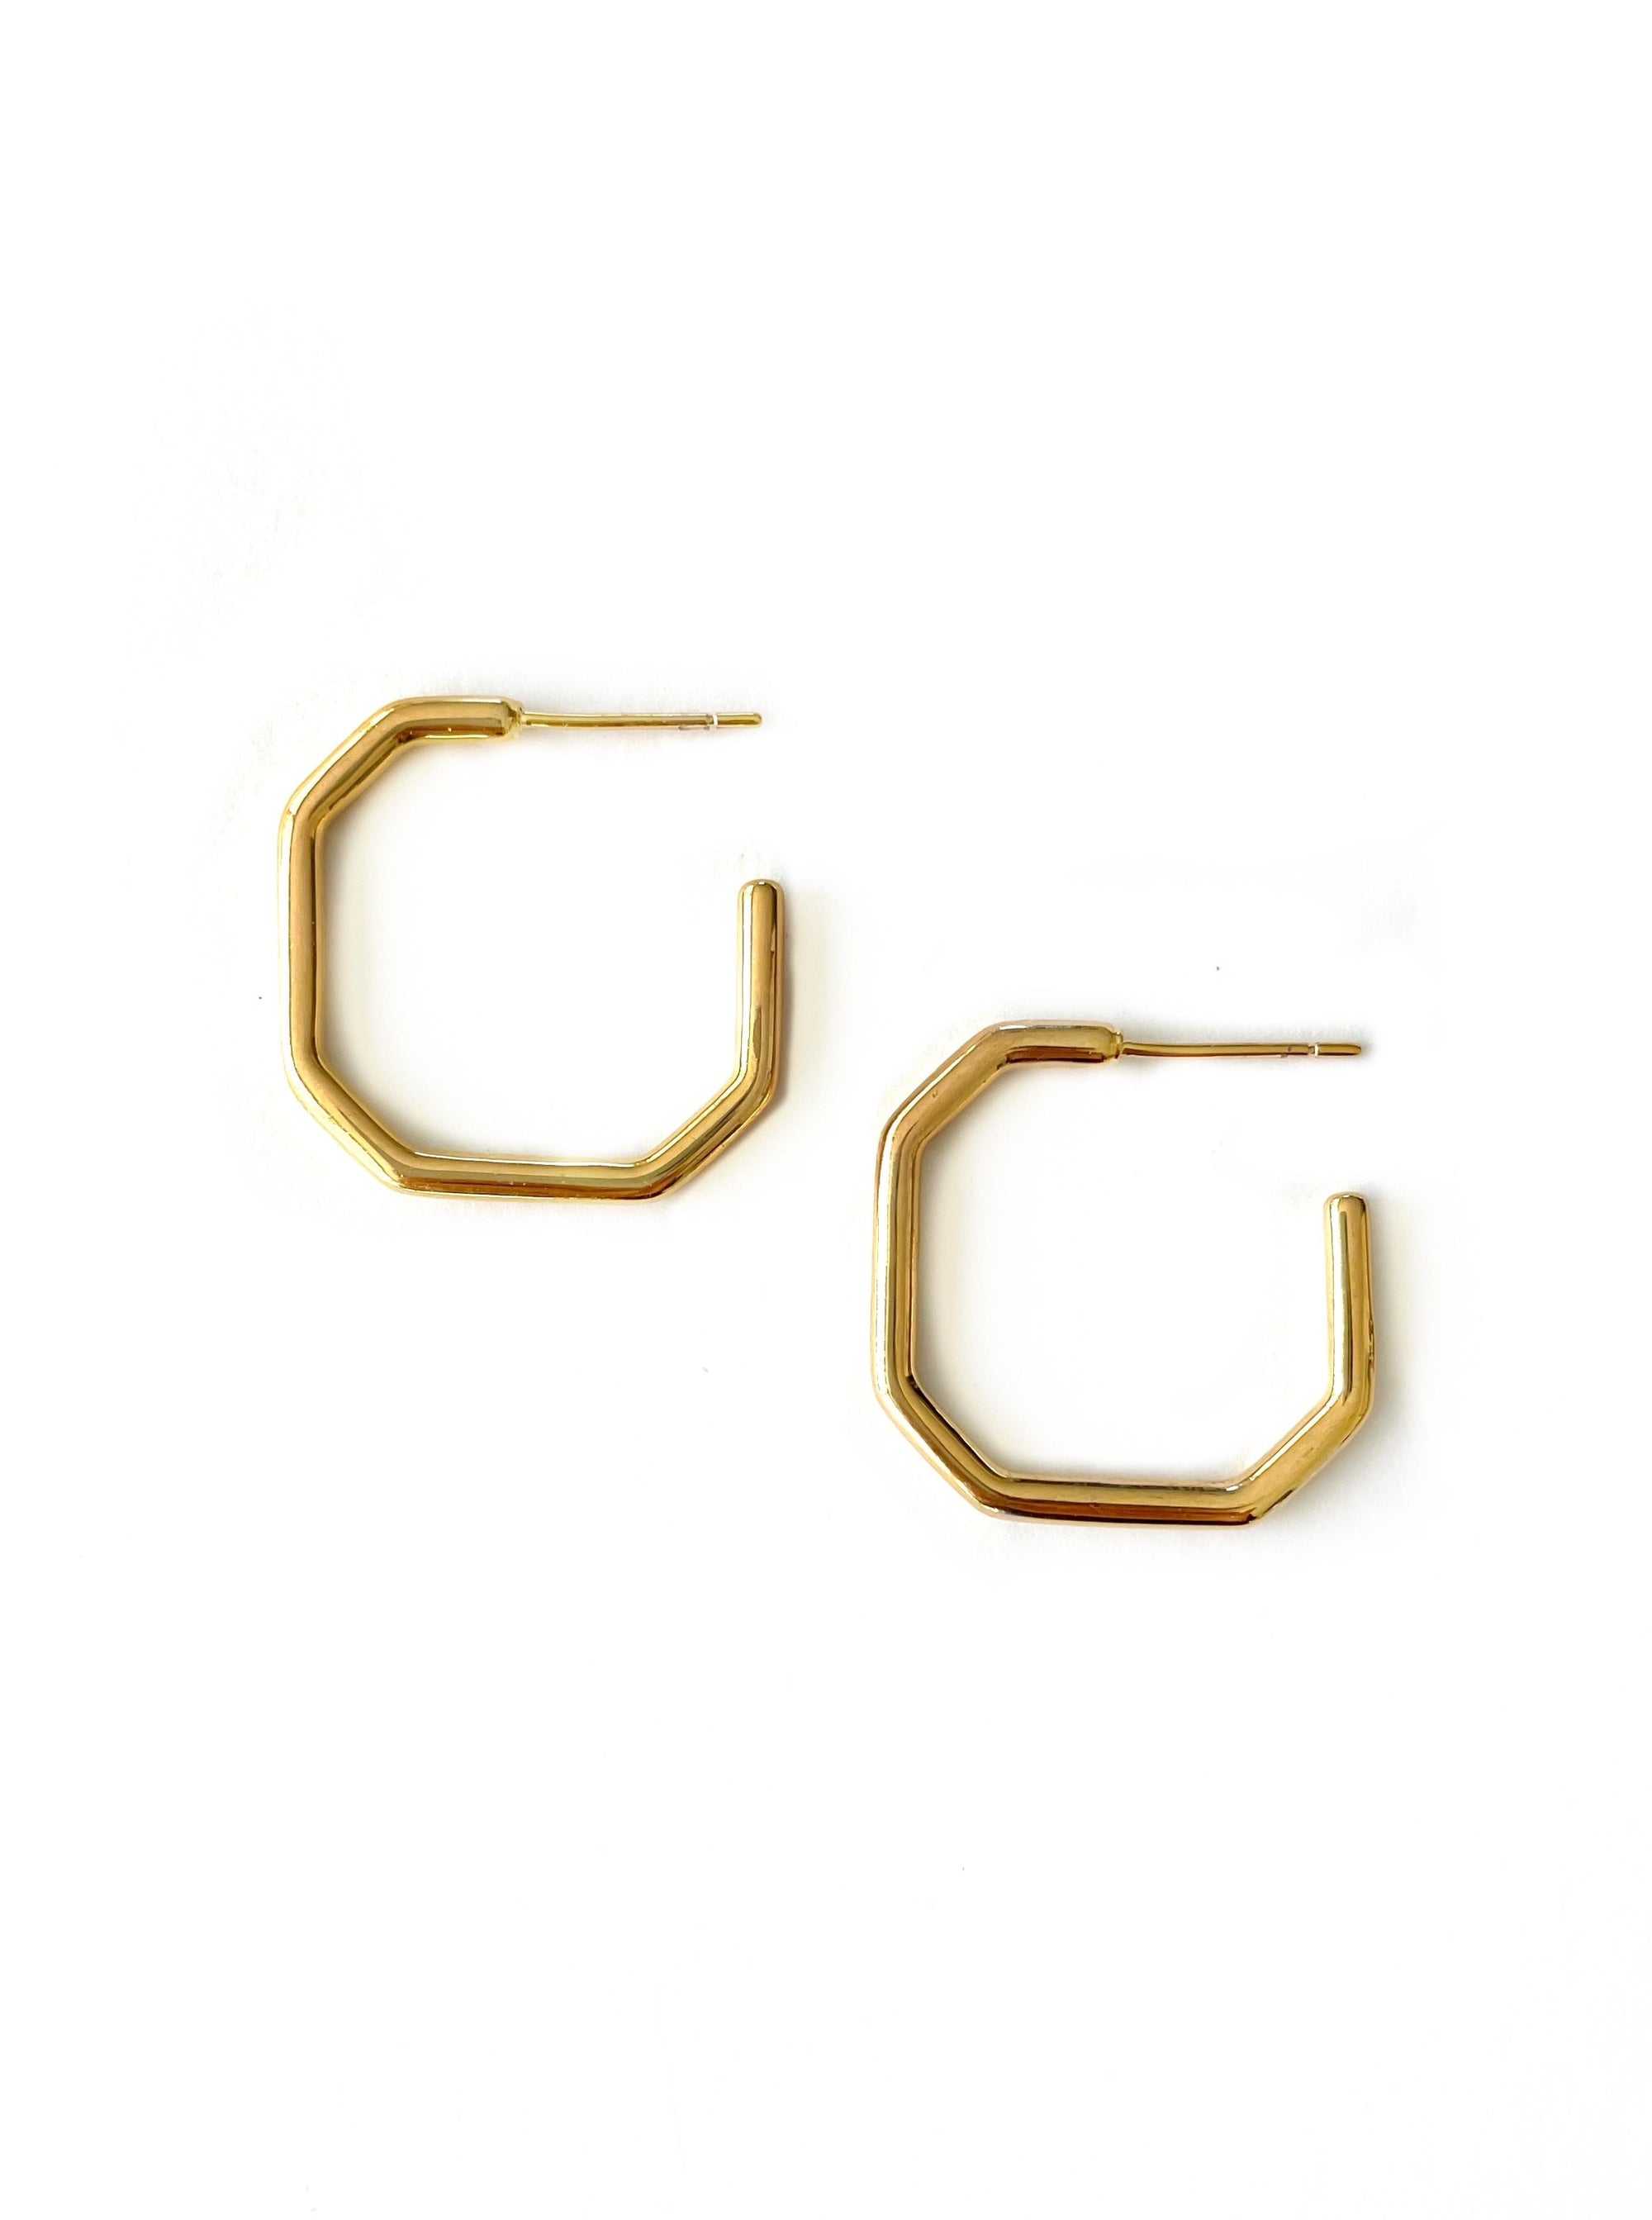 small gold plated half hoop earrings in an octagonal geometric shape  